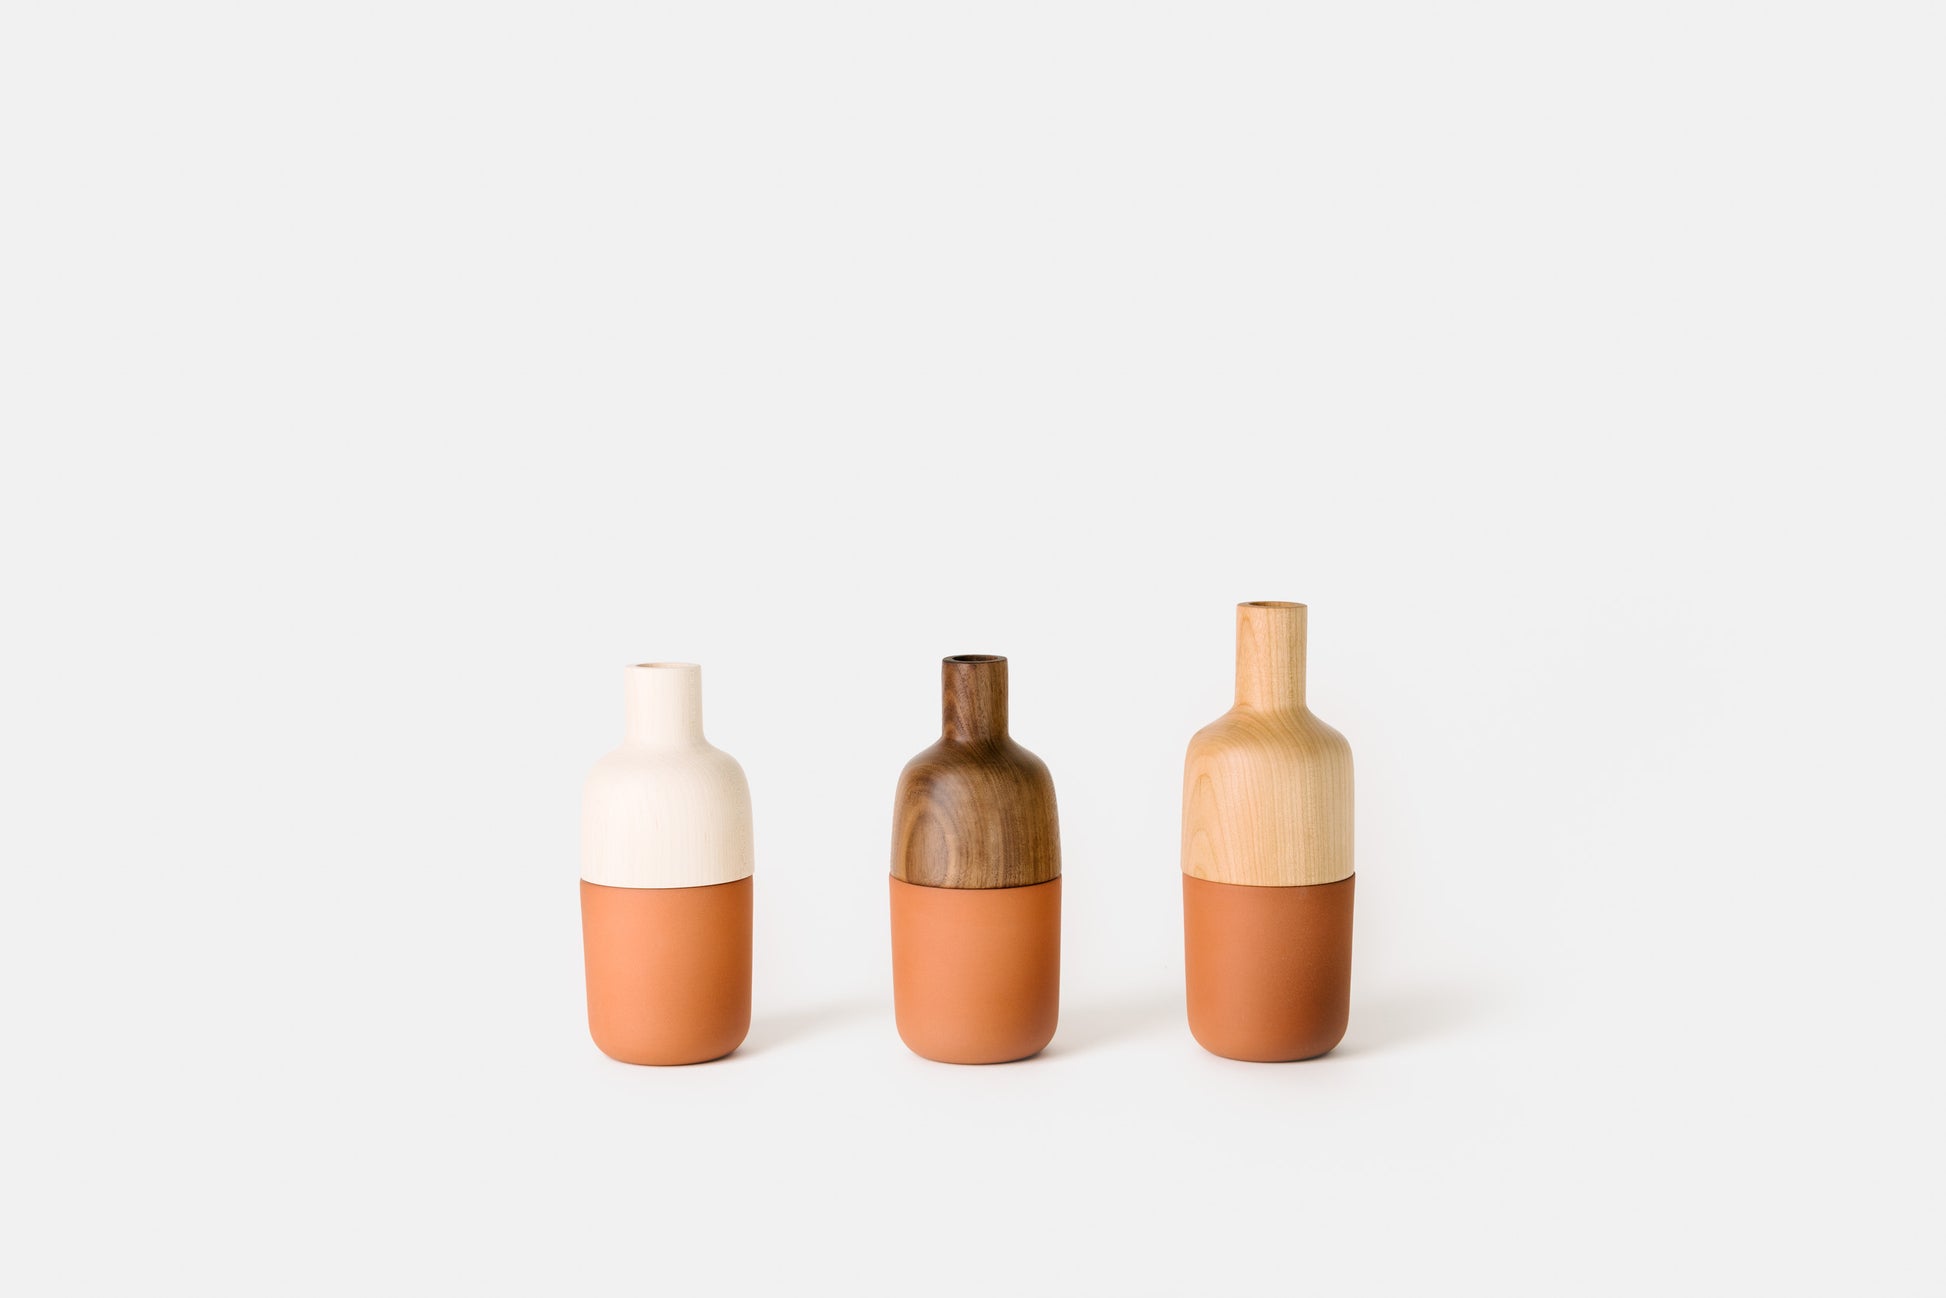 Hardwood and terracotta marais vases by Melanie Abrantes Designs.